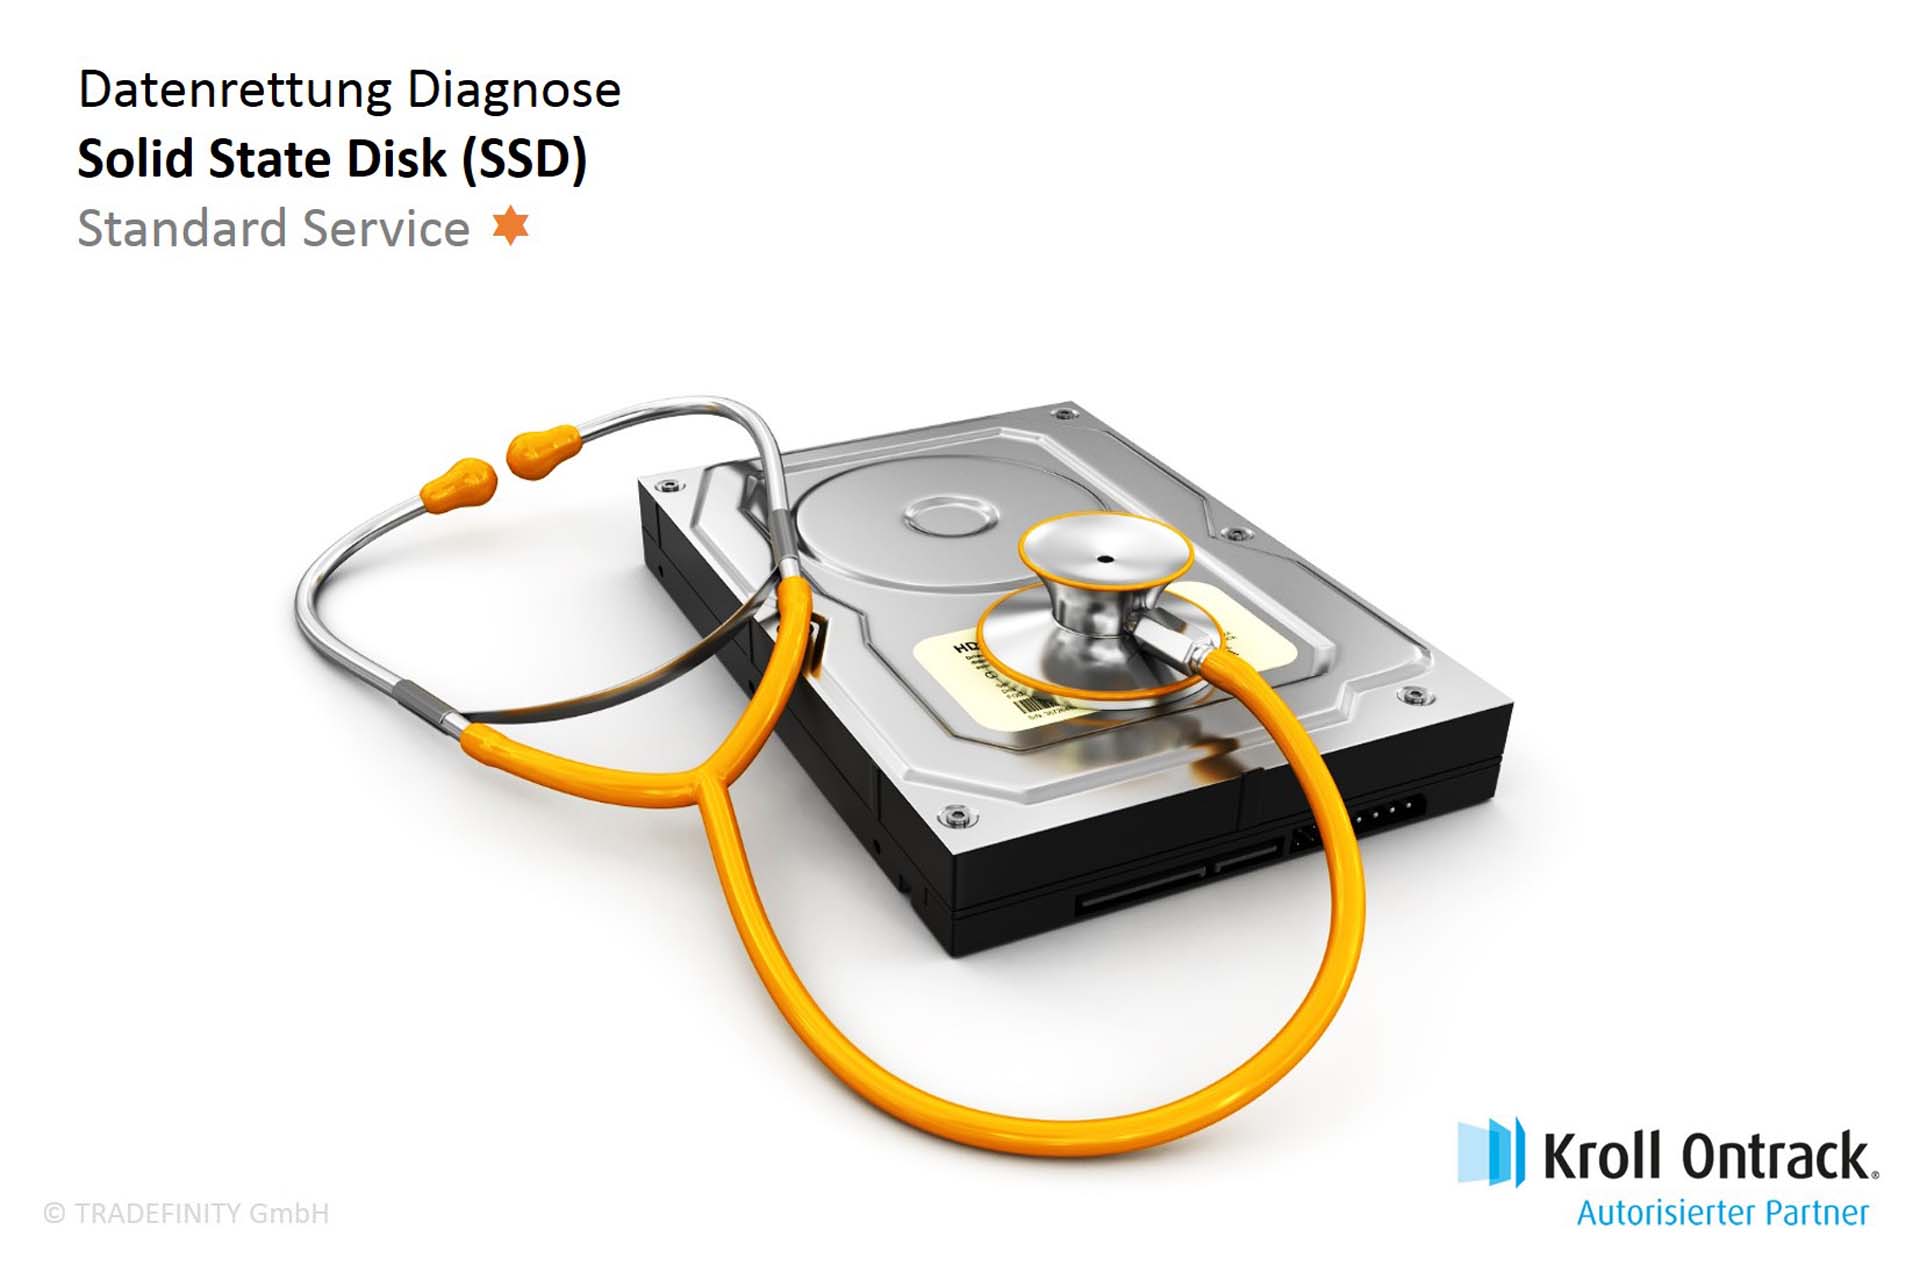 Datenrettung Diagnose (Standard Service) von SSD